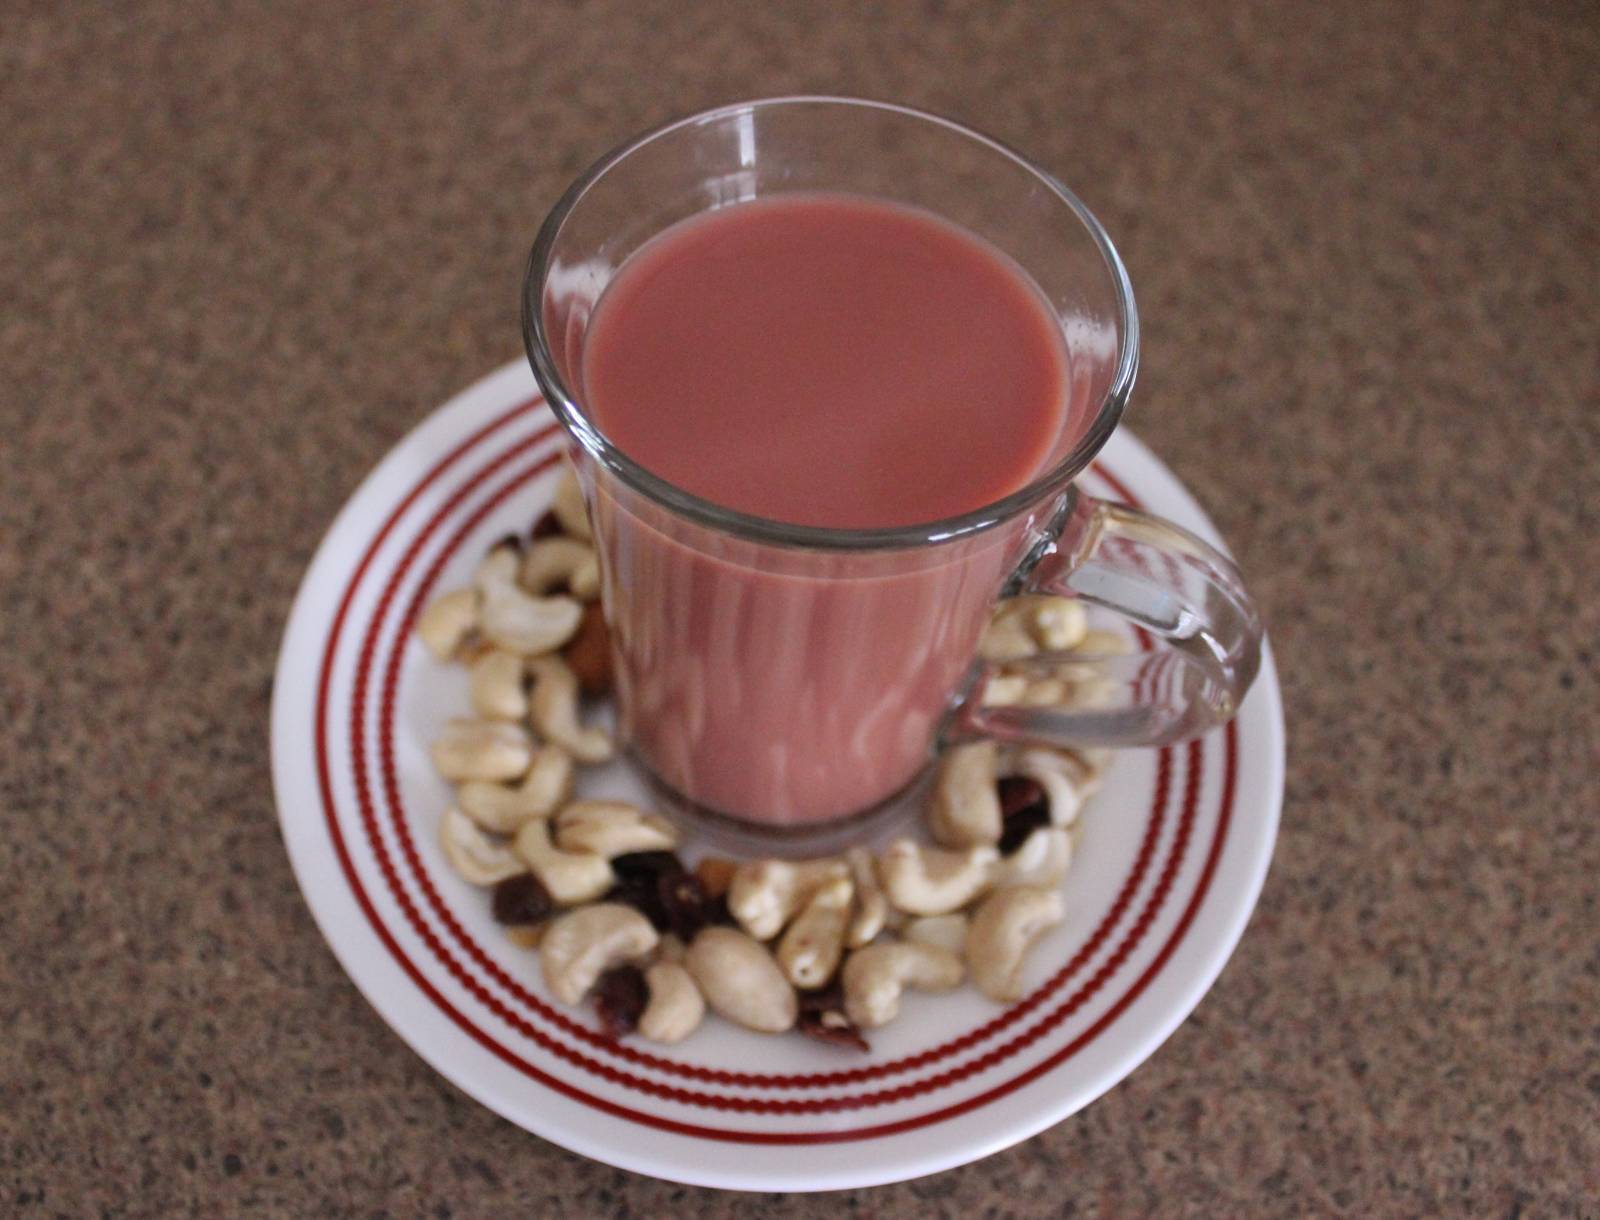 कश्मीरी स्टाइल नून चाय रेसिपी - Kashmiri Style Noon Chai Recipe